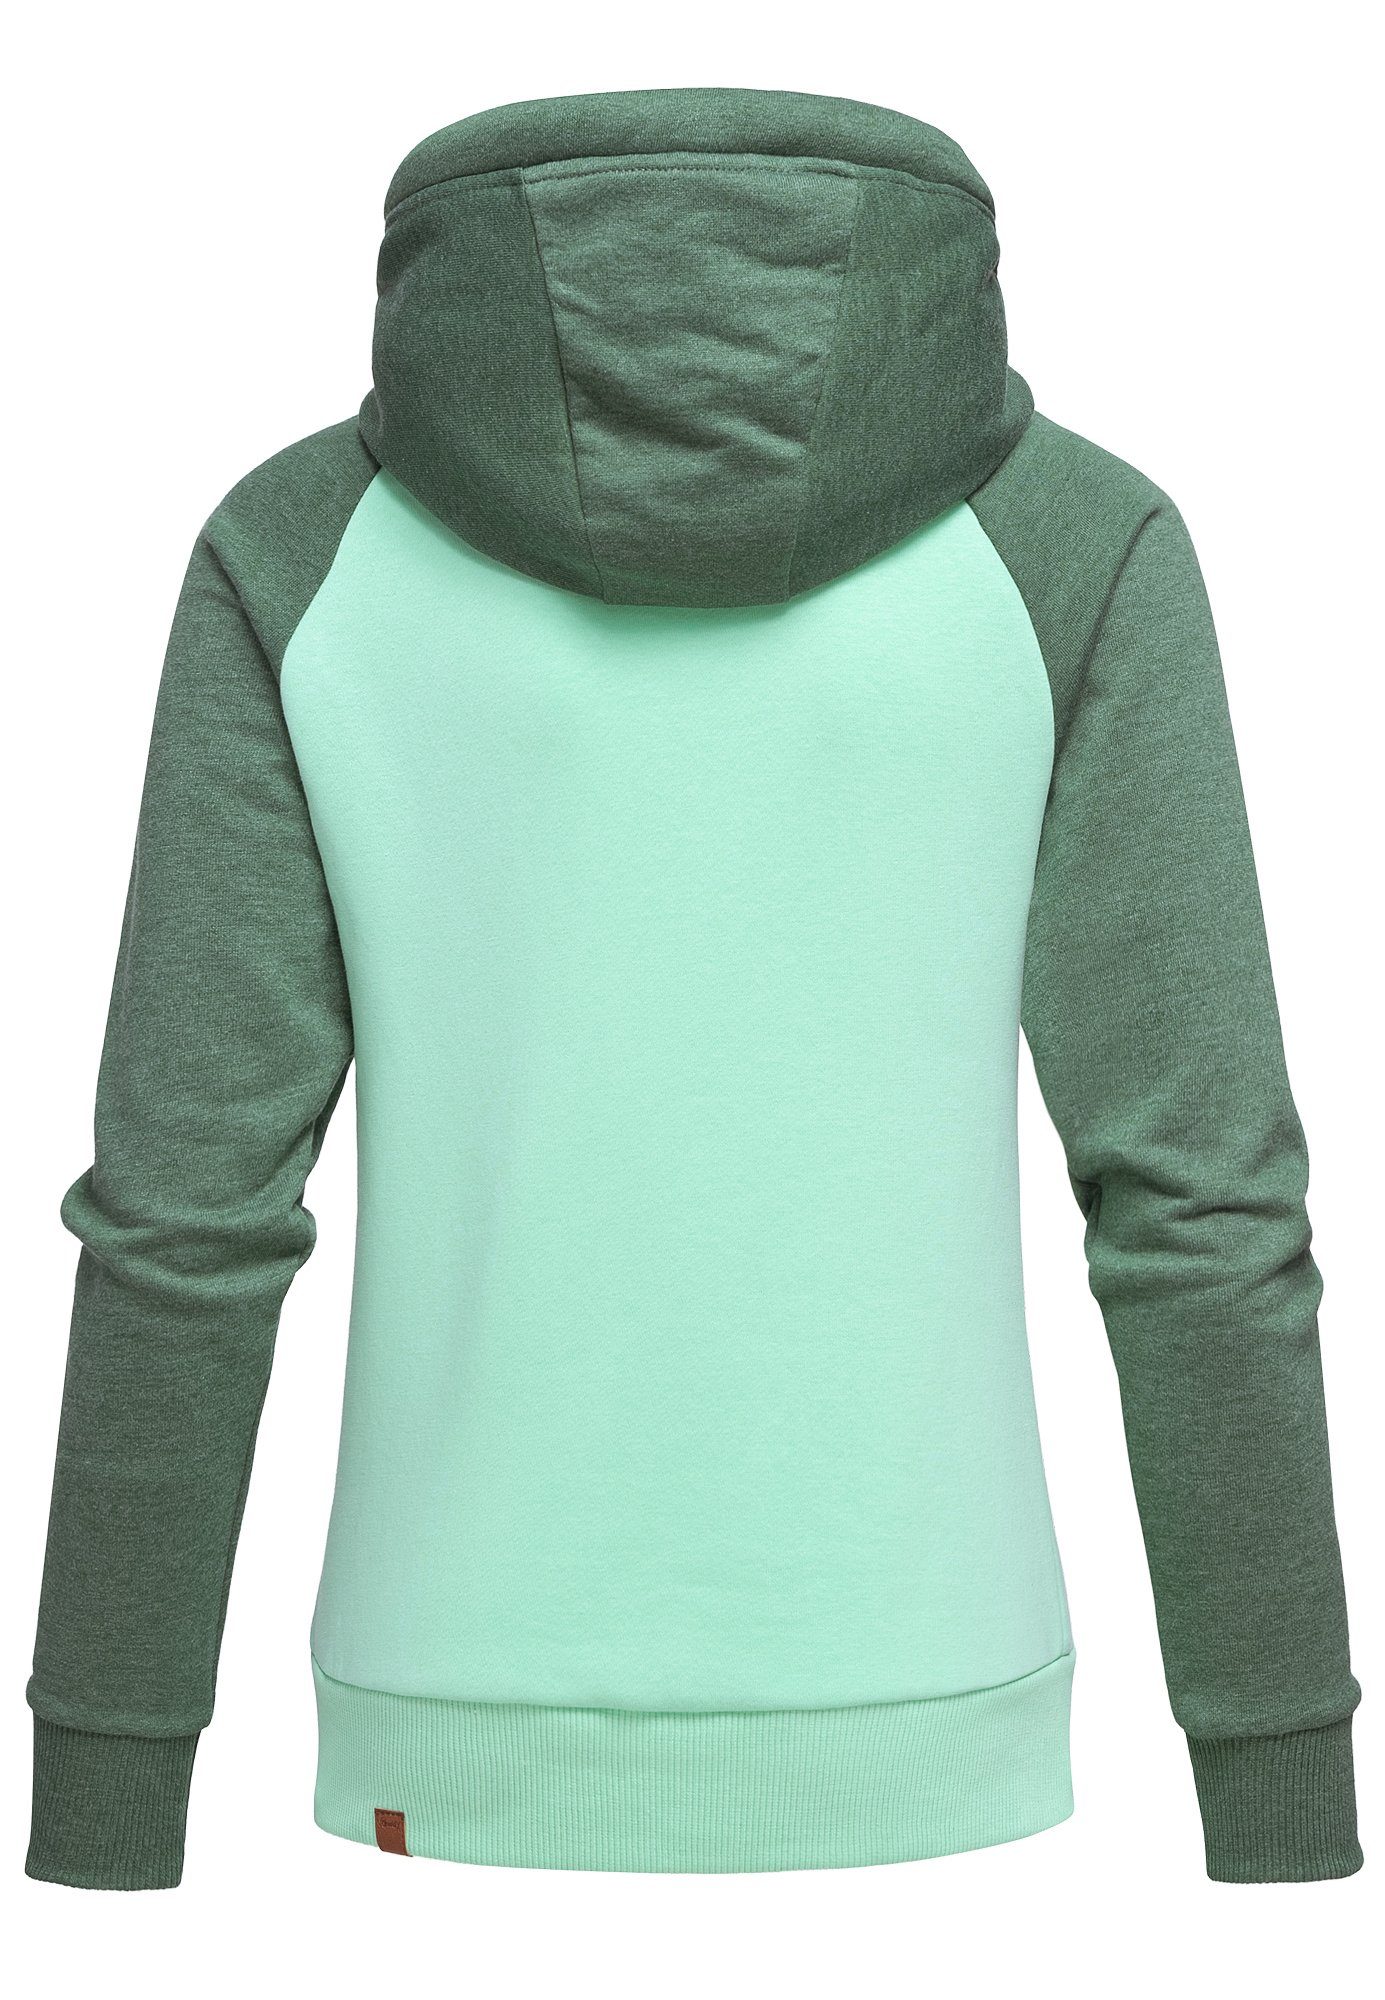 Pullover Kapuzenpullover Sweatshirt RILEY Sweatjacke REPUBLIX Hoodie Damen Melange Mint/Grün